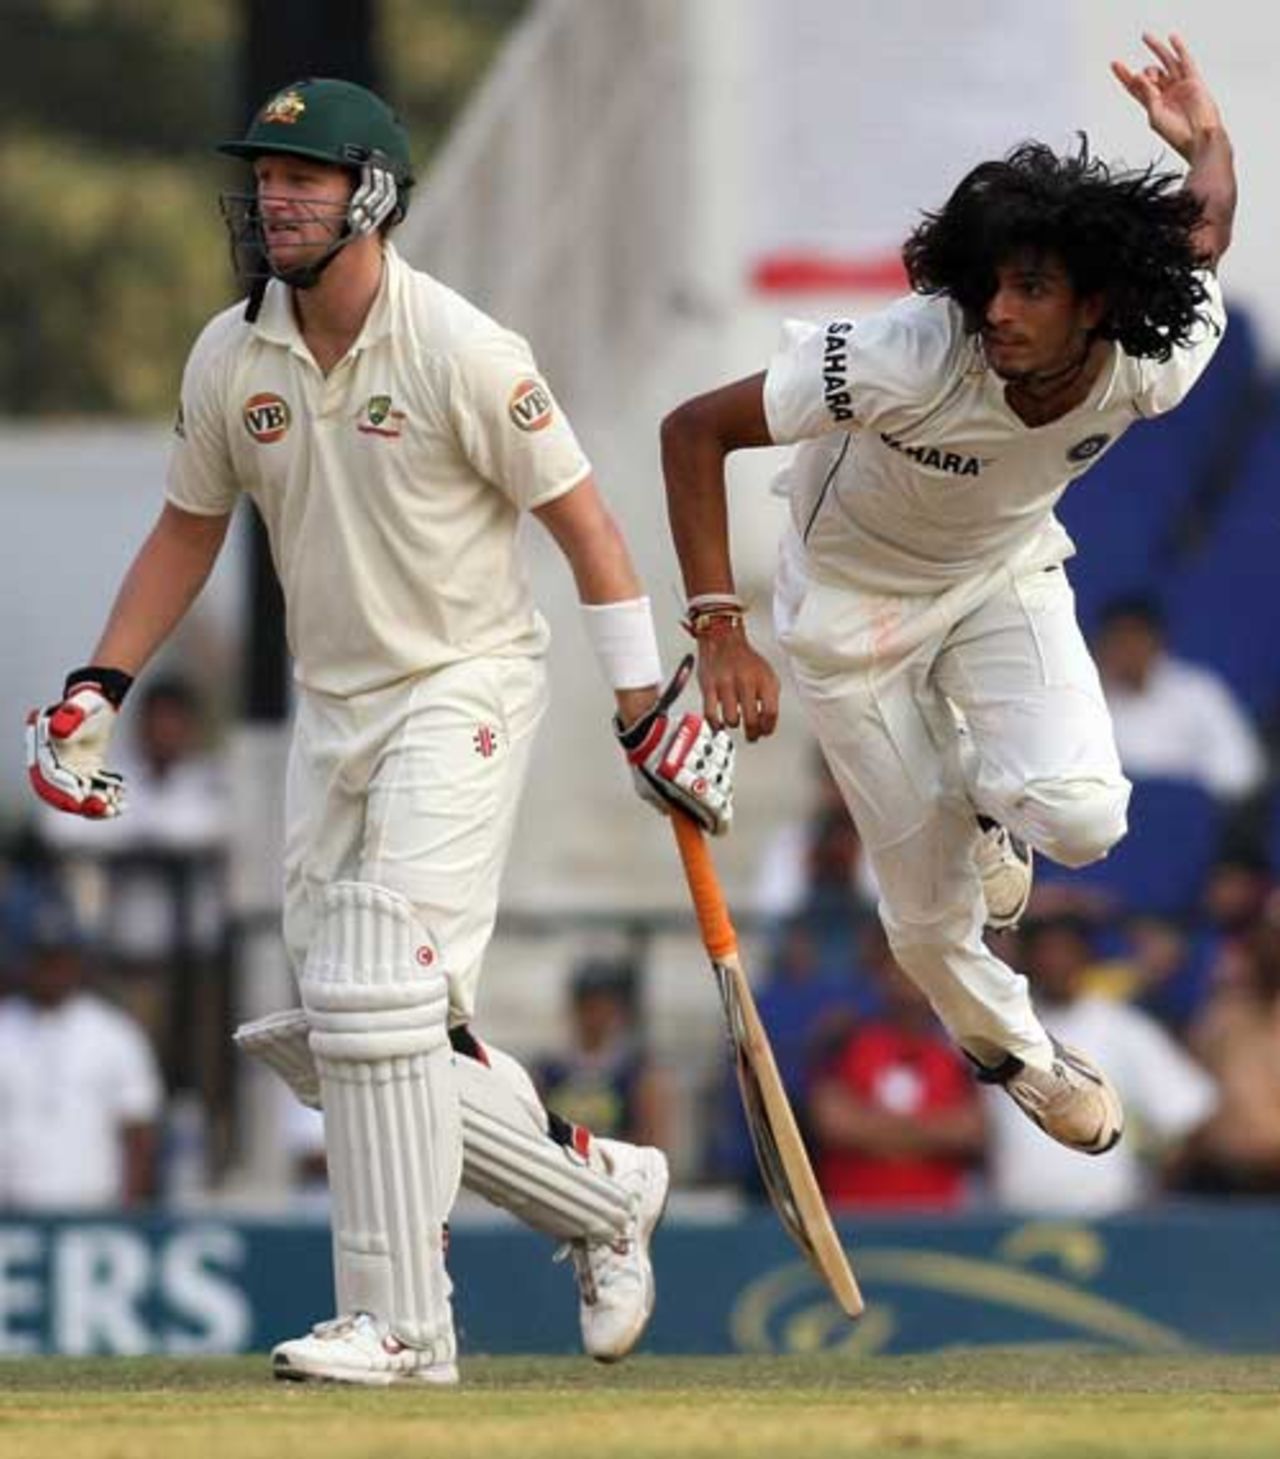 Cameron White looks on as Ishant Sharma bowls, India v Australia, fourth Test, Nagpur, November 8, 2008